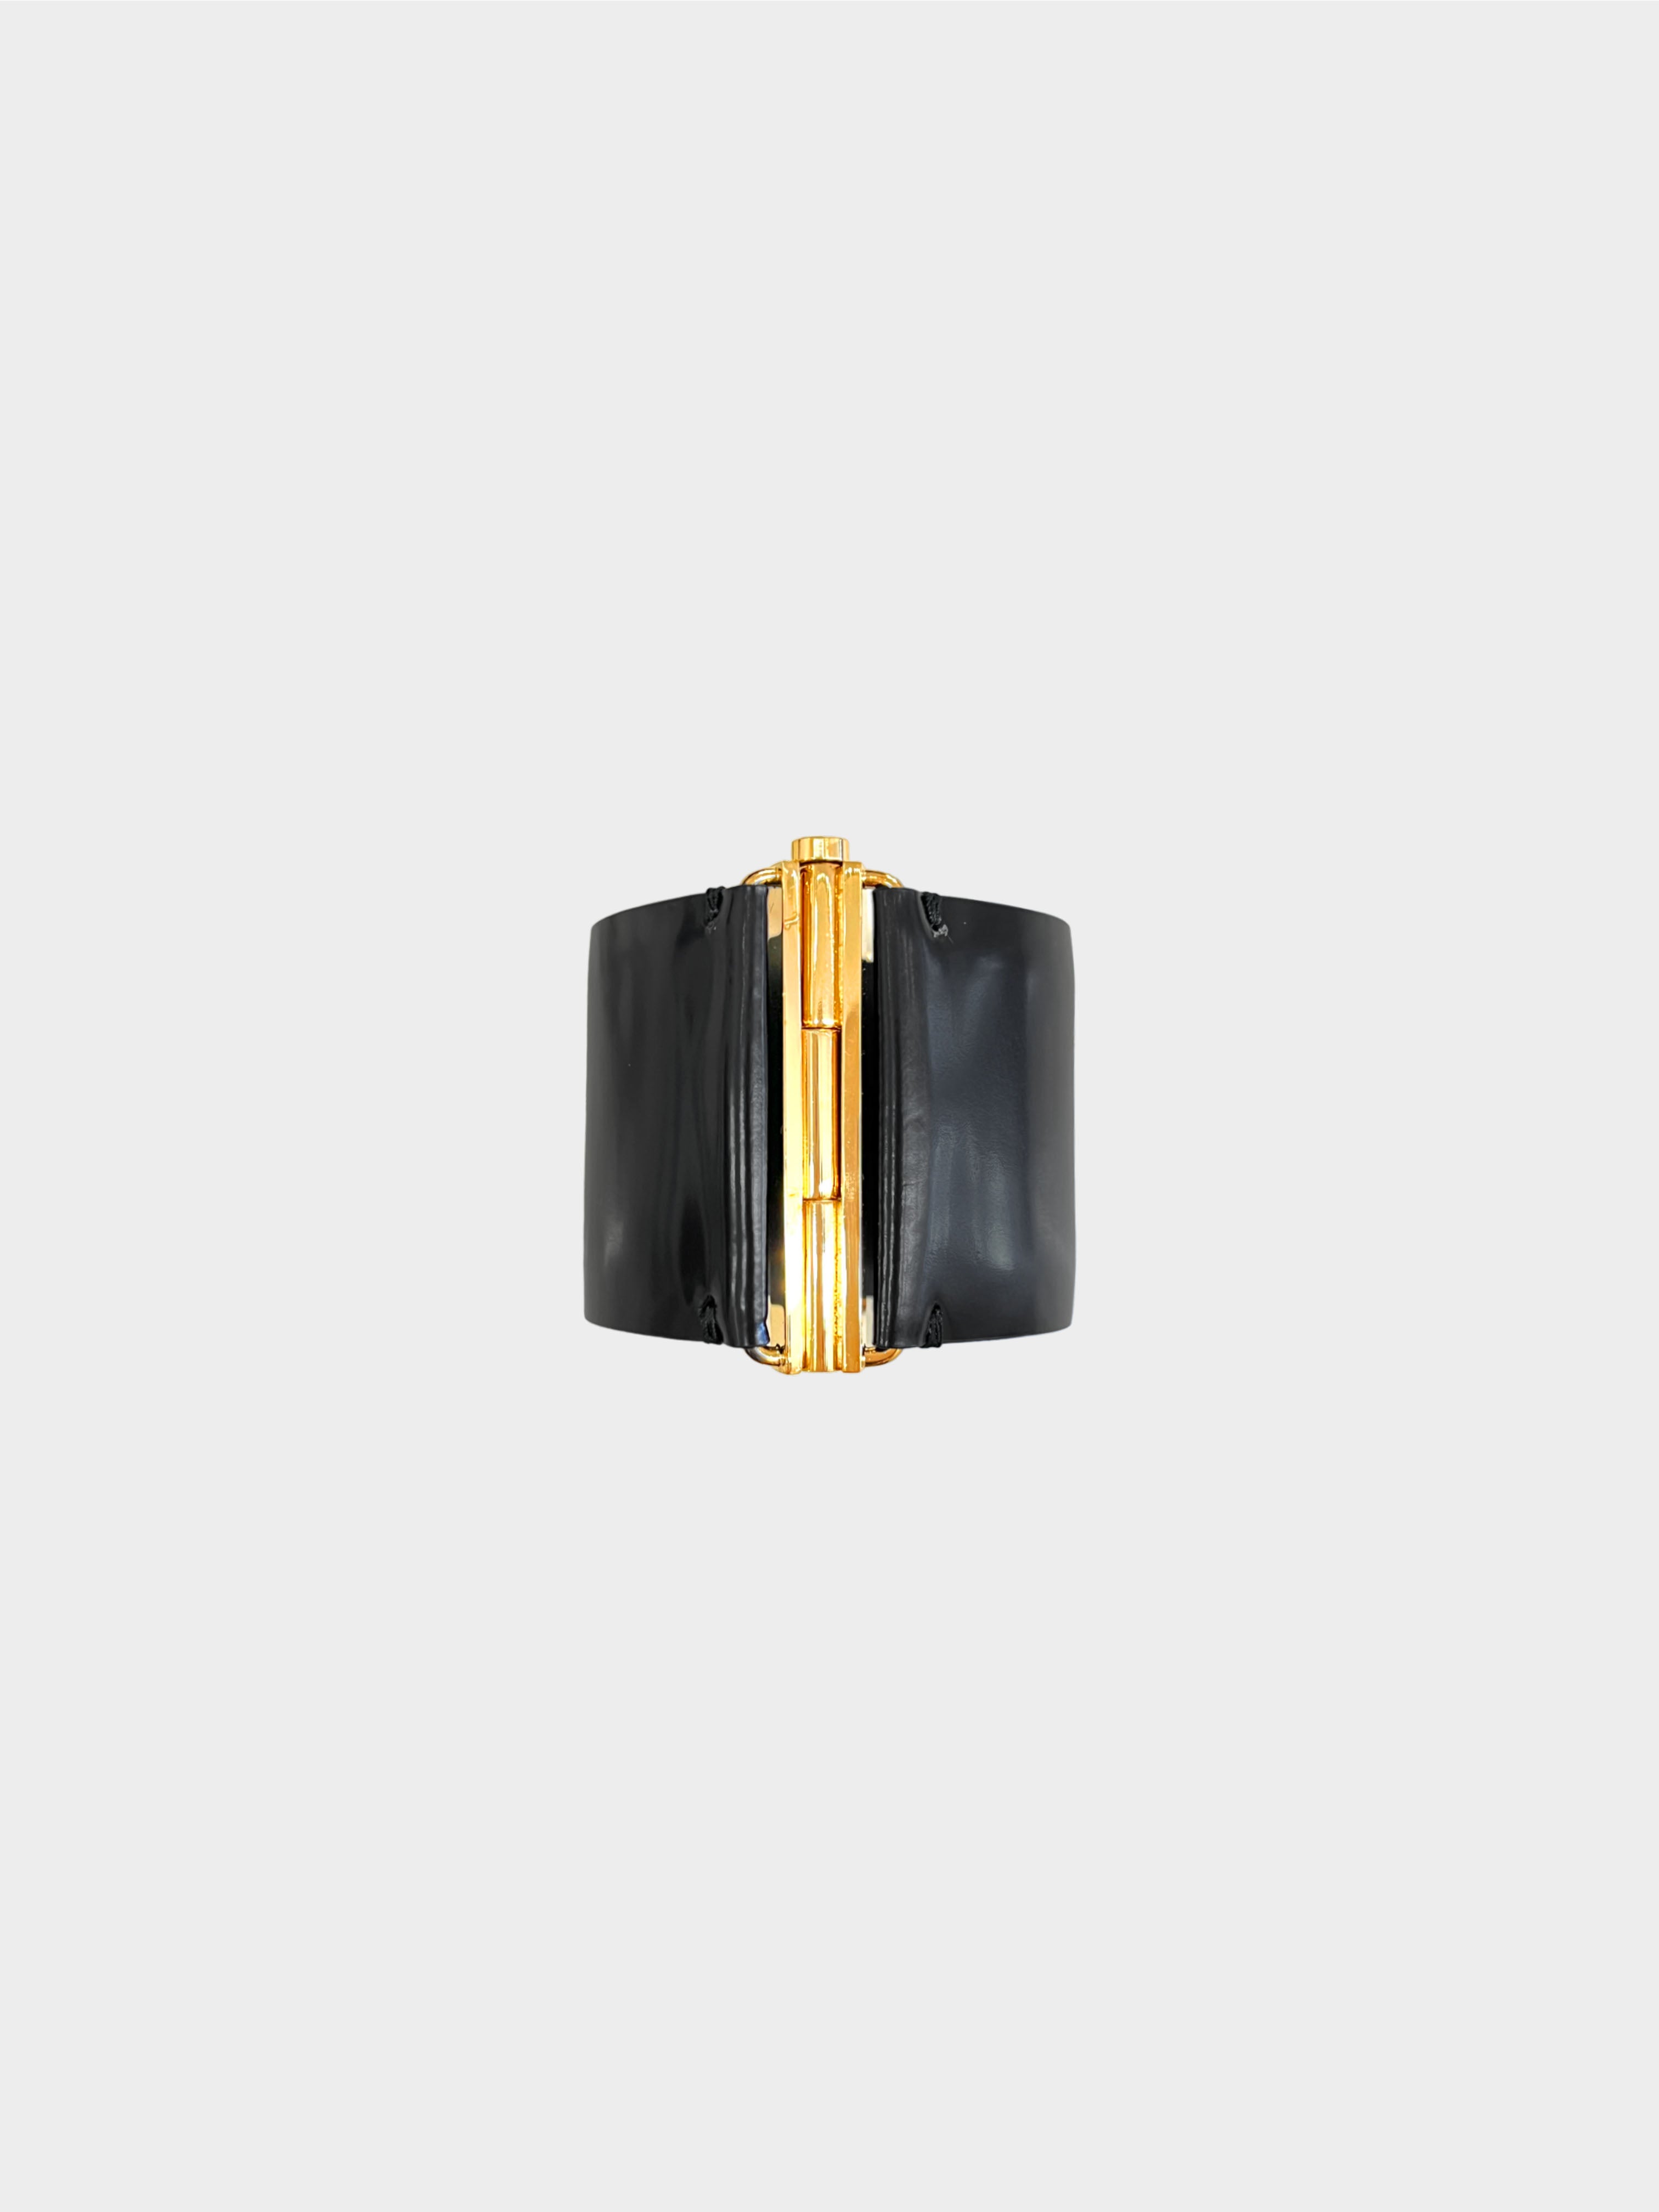 Chanel 2017 Black Rhinestone Camellia Leather Cuff Bracelet